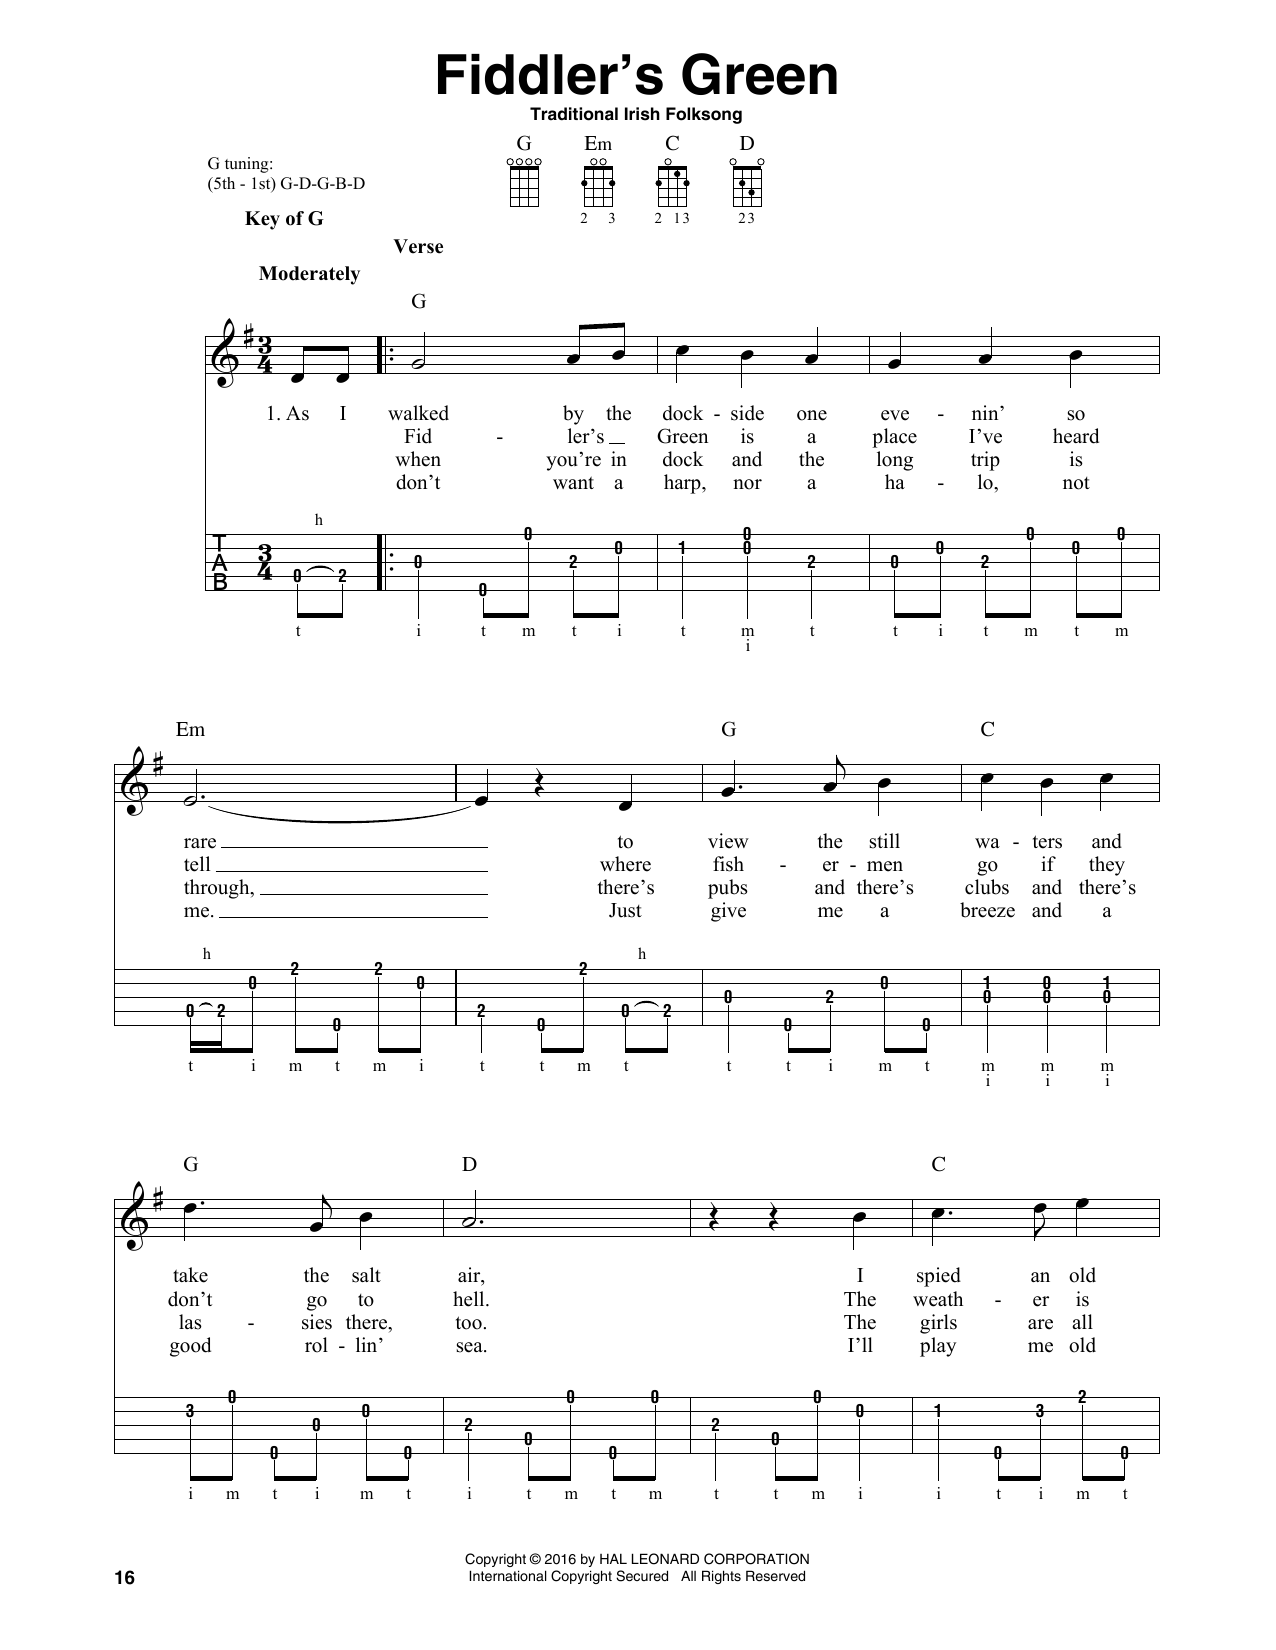 Traditional Irish Folk Song Fiddler's Green Sheet Music Notes & Chords for Banjo - Download or Print PDF